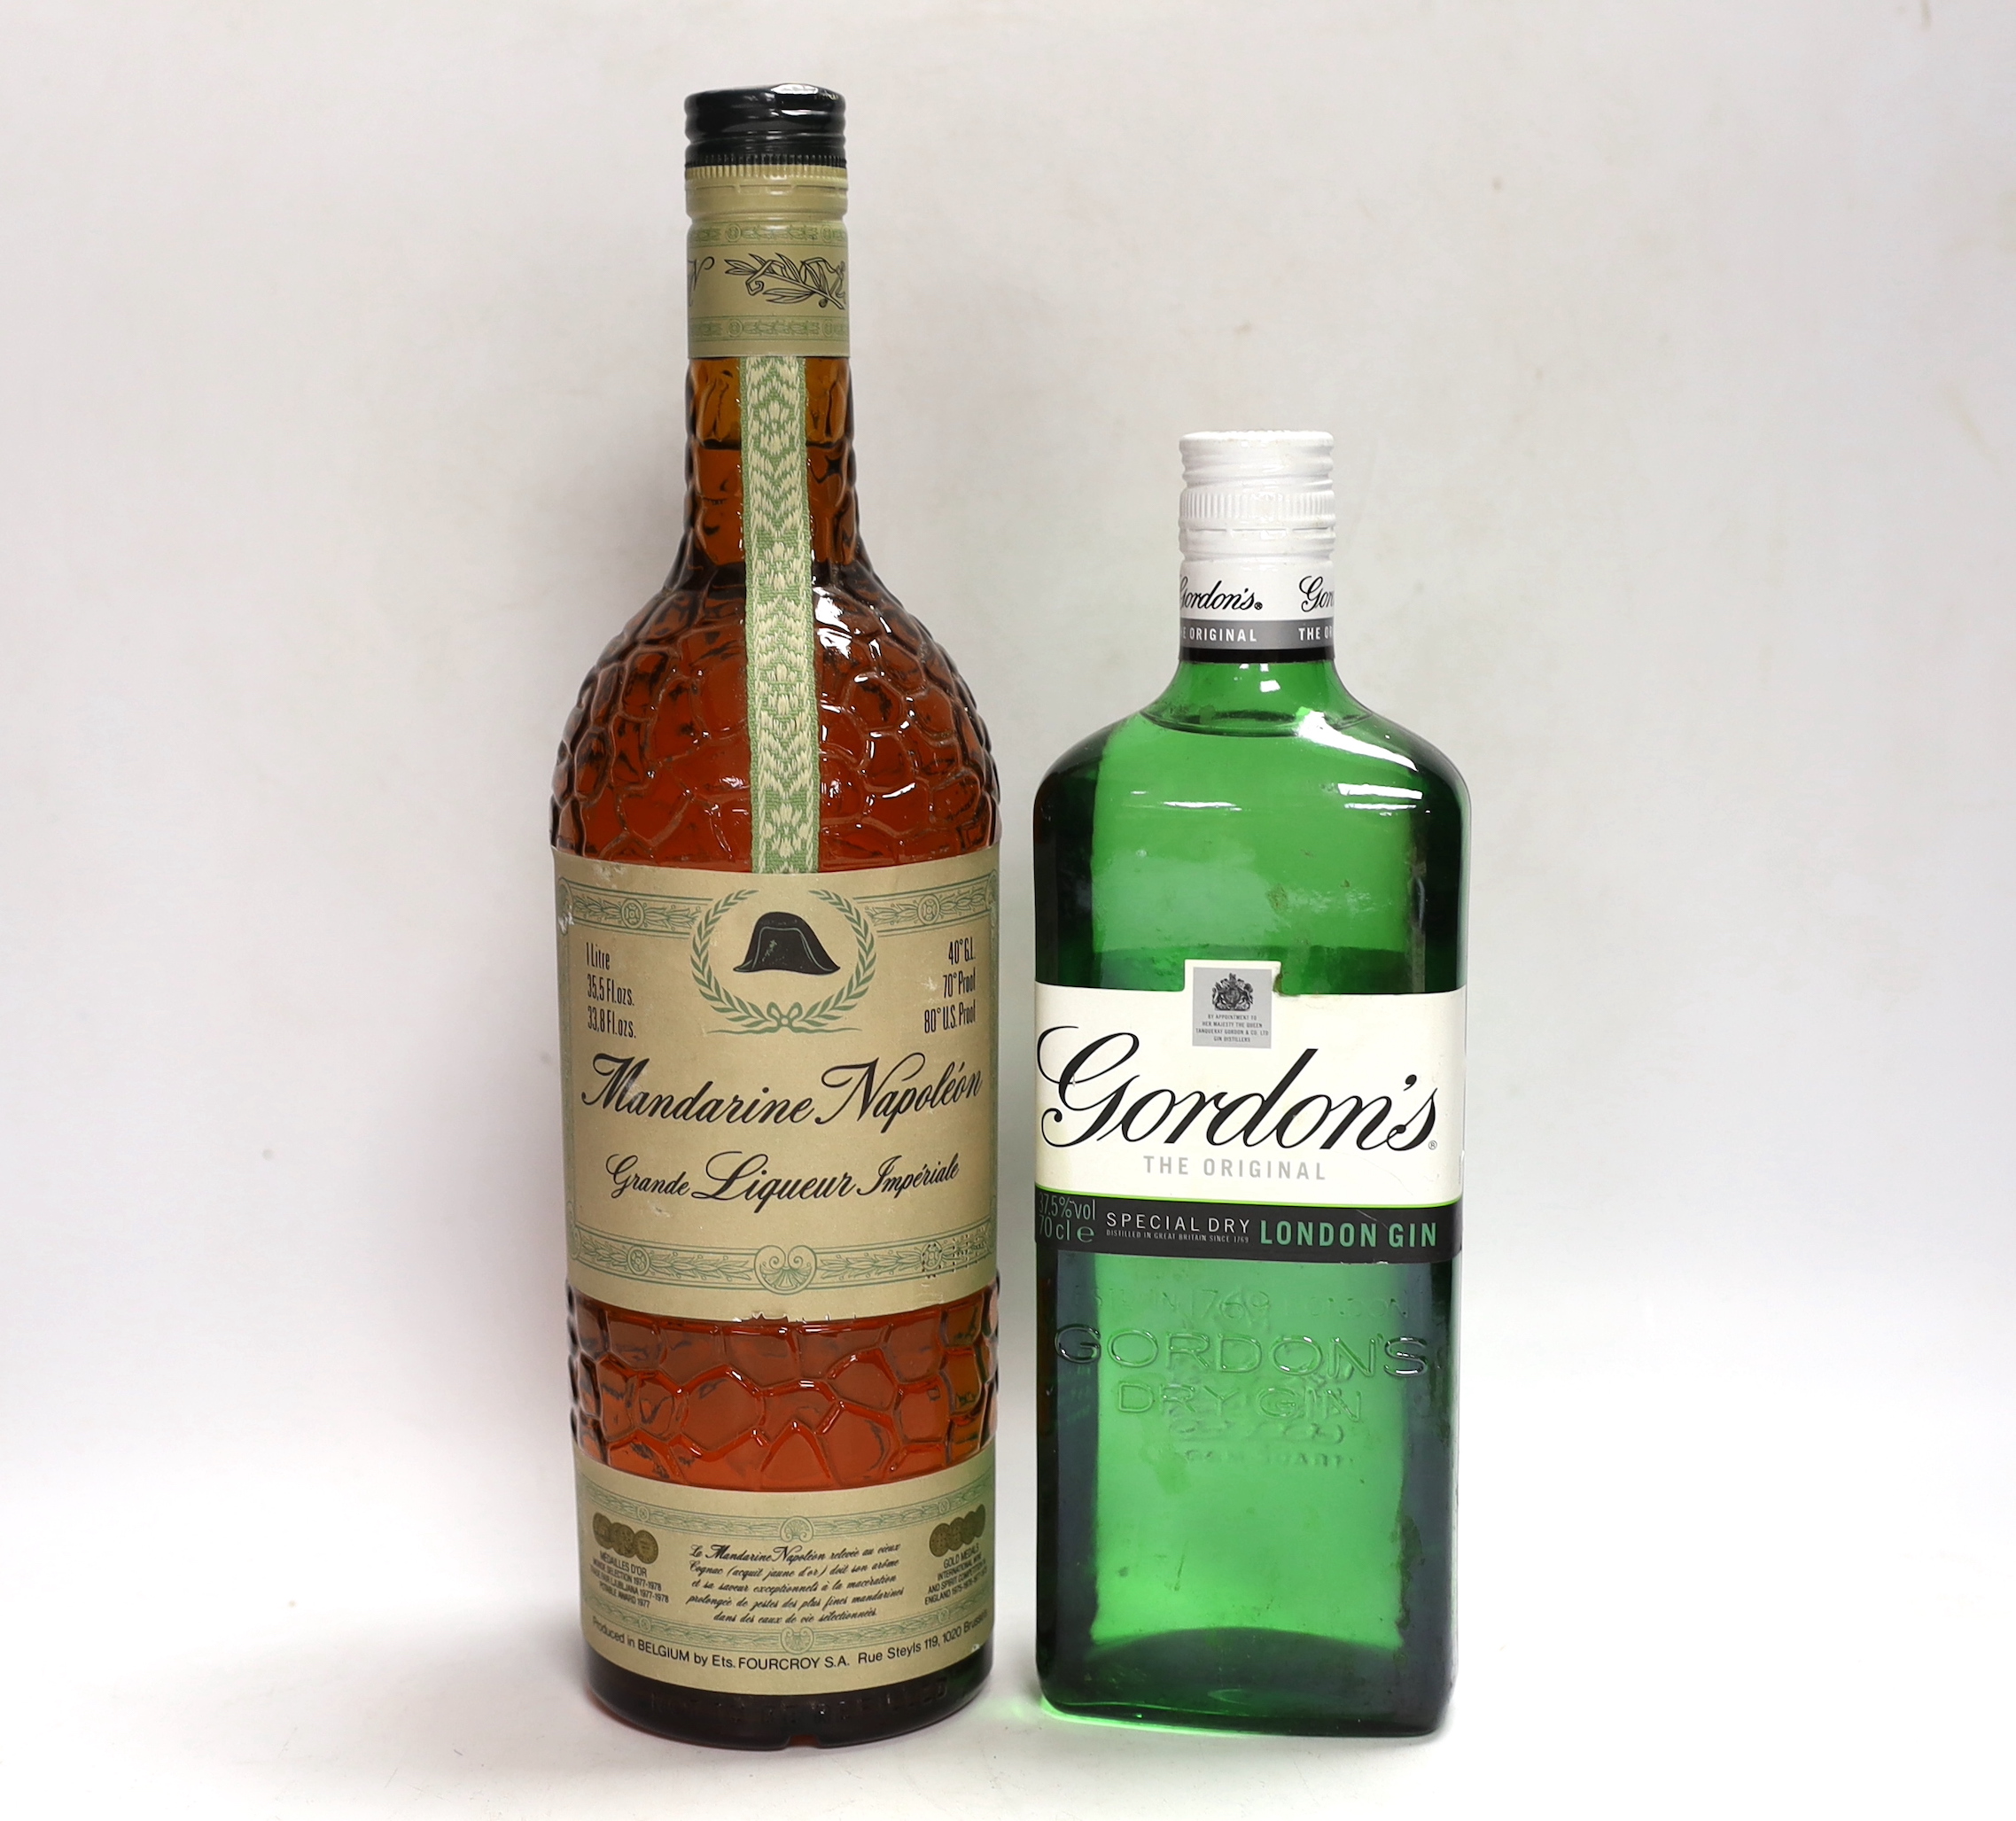 A bottle of Mandarine Napoleon brandy and a Gordon's gin